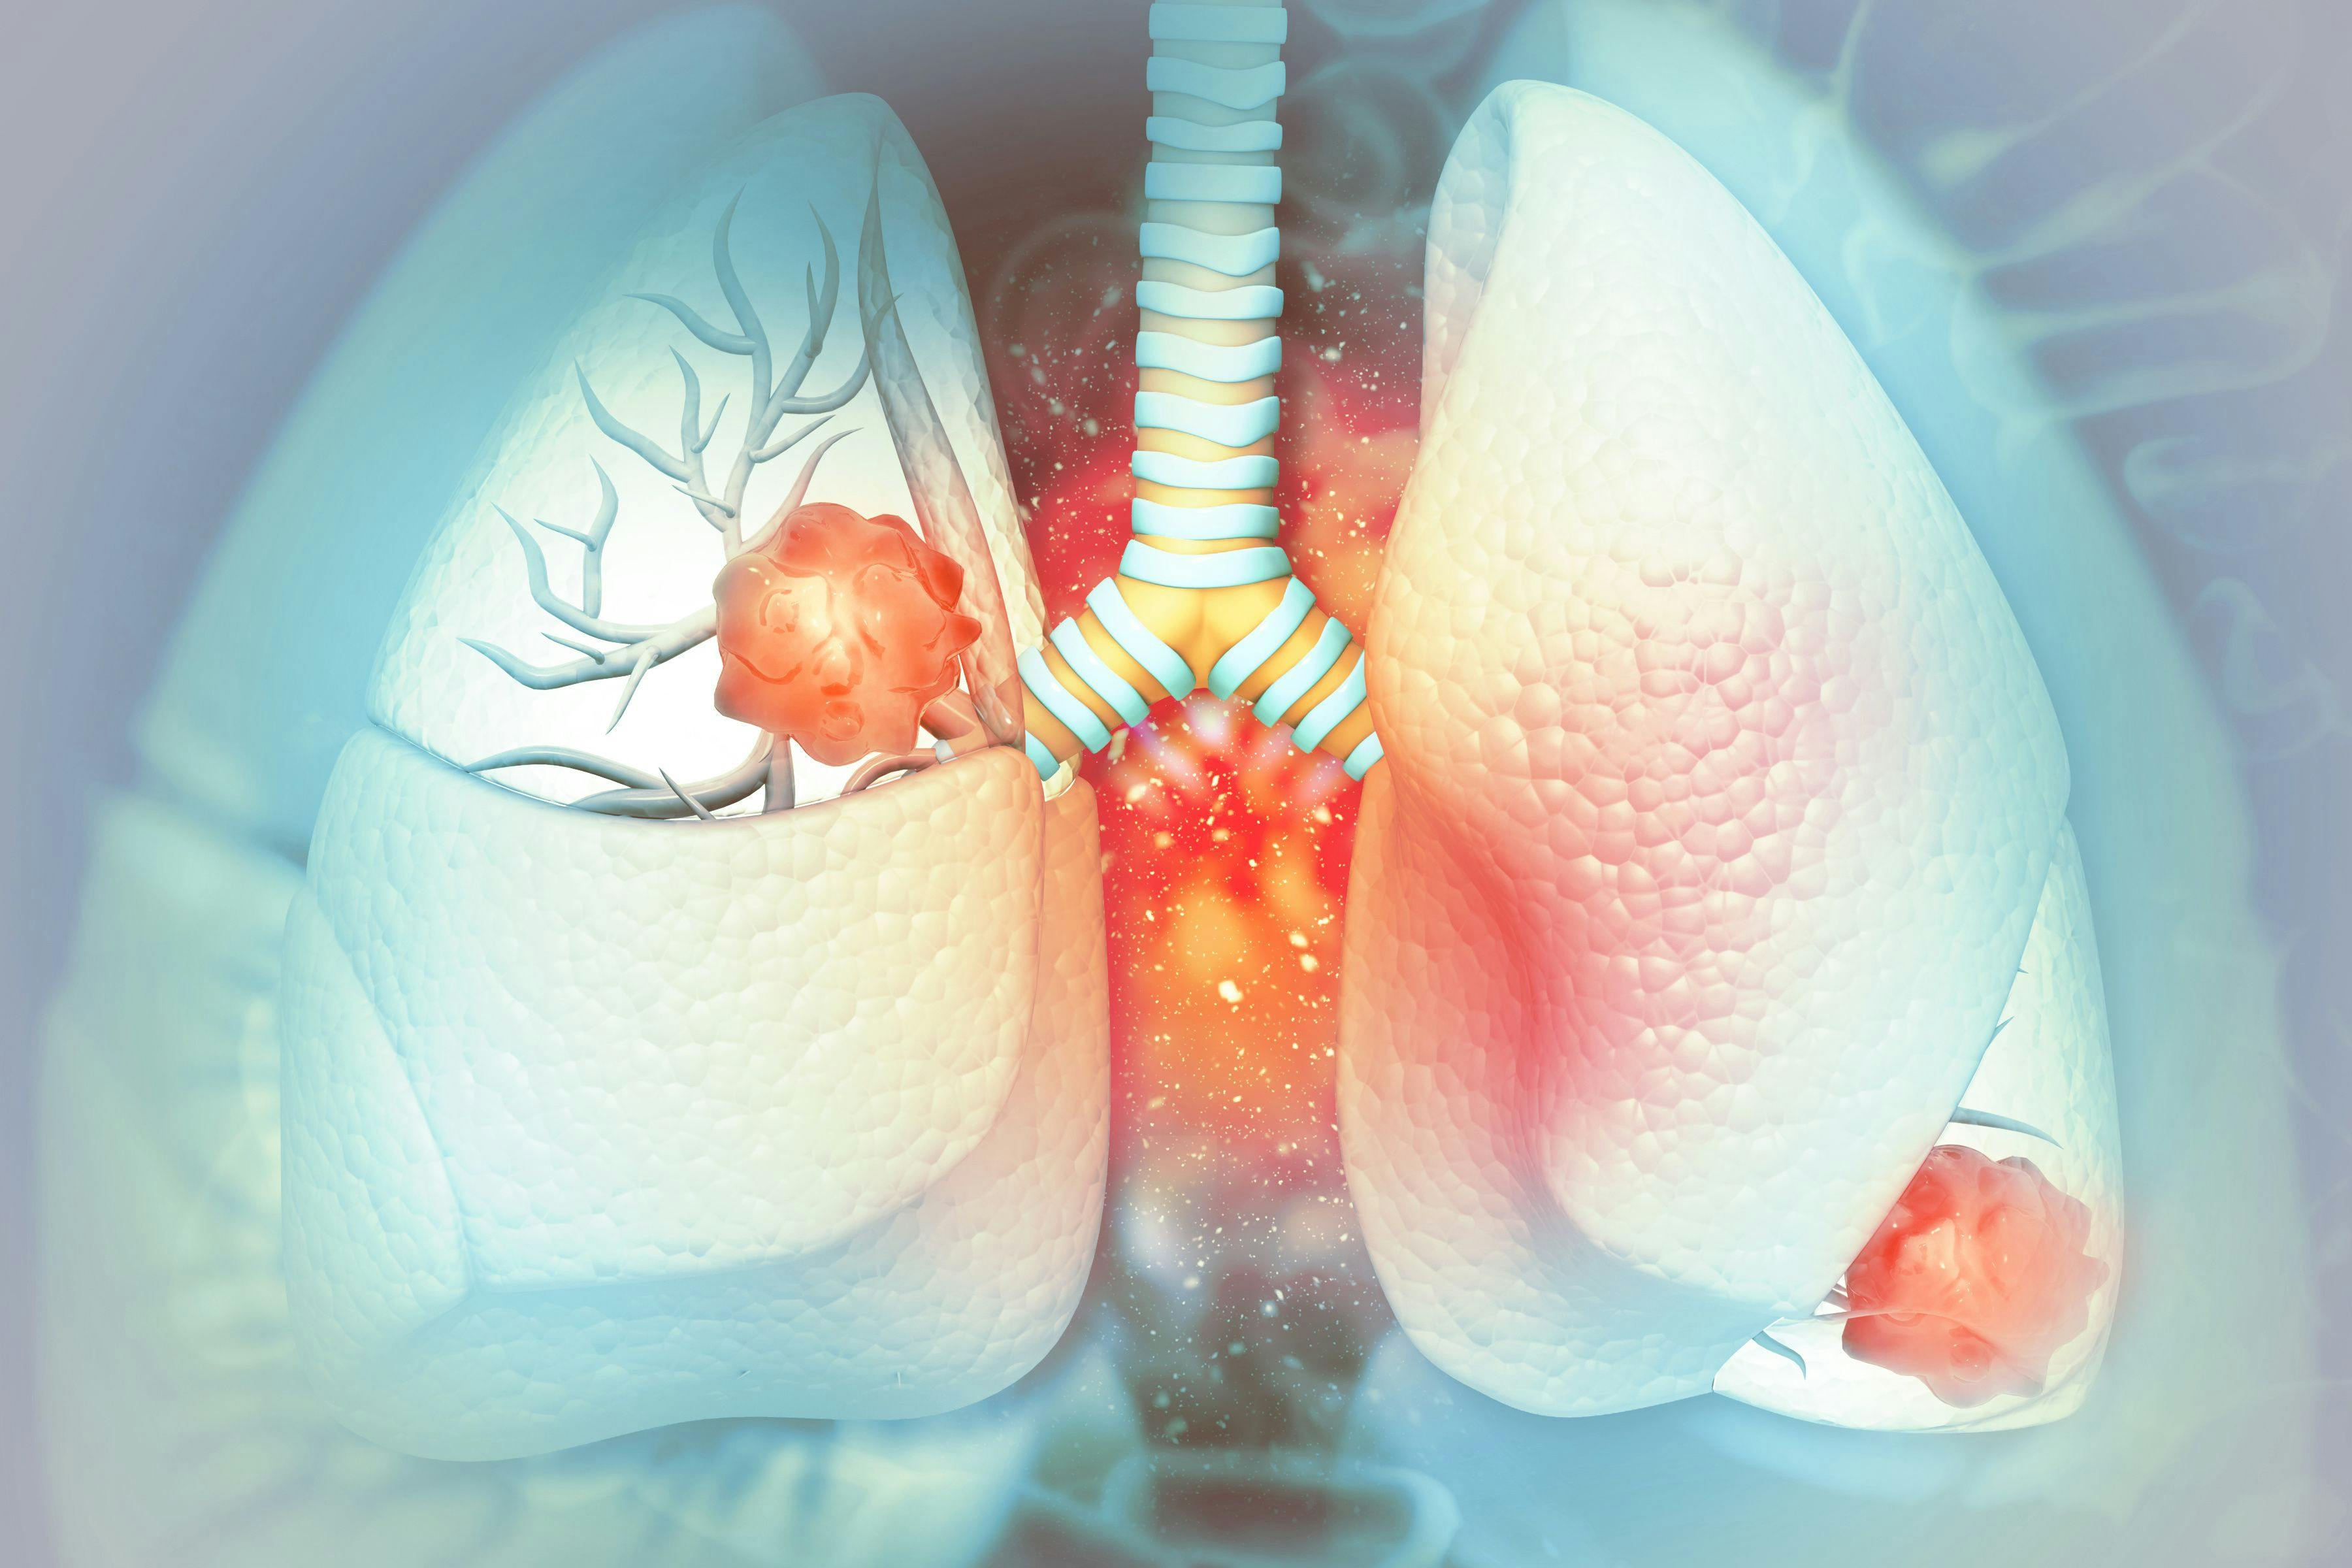 Lung Cancer: © Crystal Light - stock.adobe.com